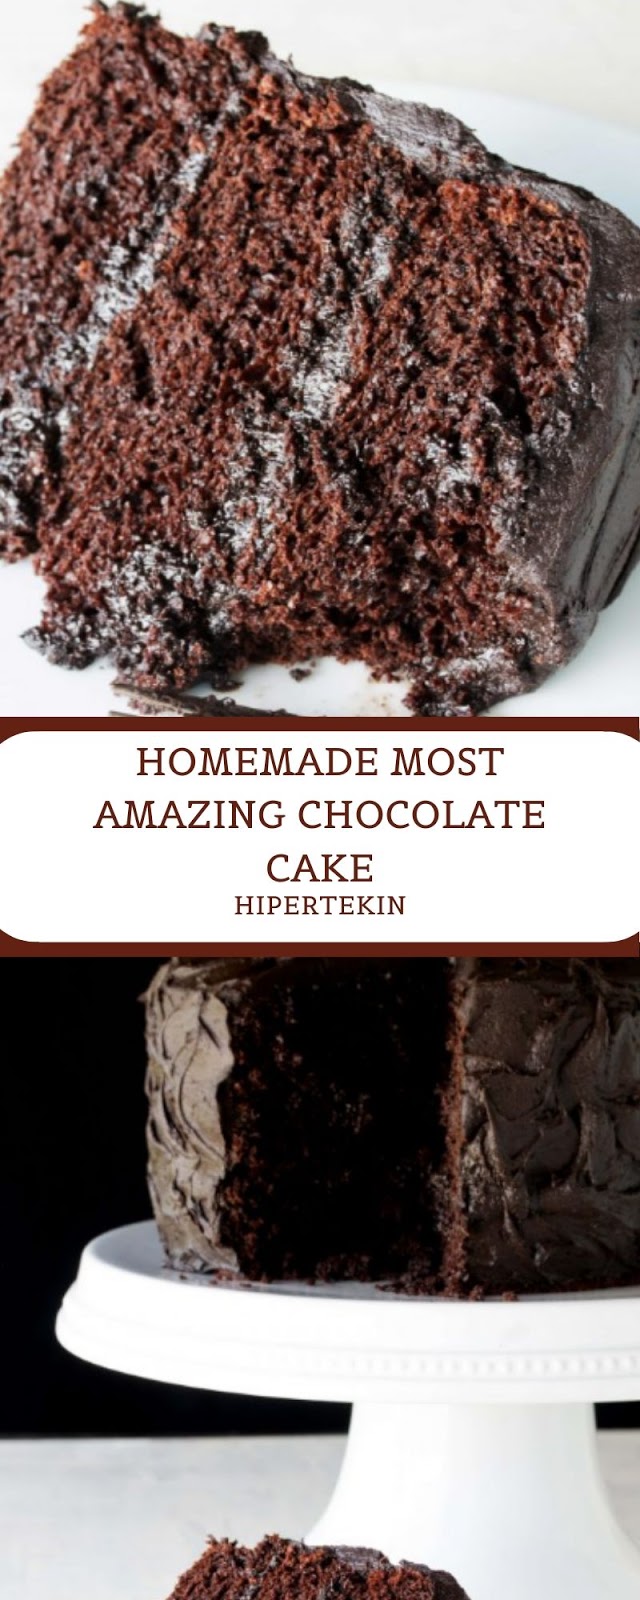 HOMEMADE MOST AMAZING CHOCOLATE CAKE